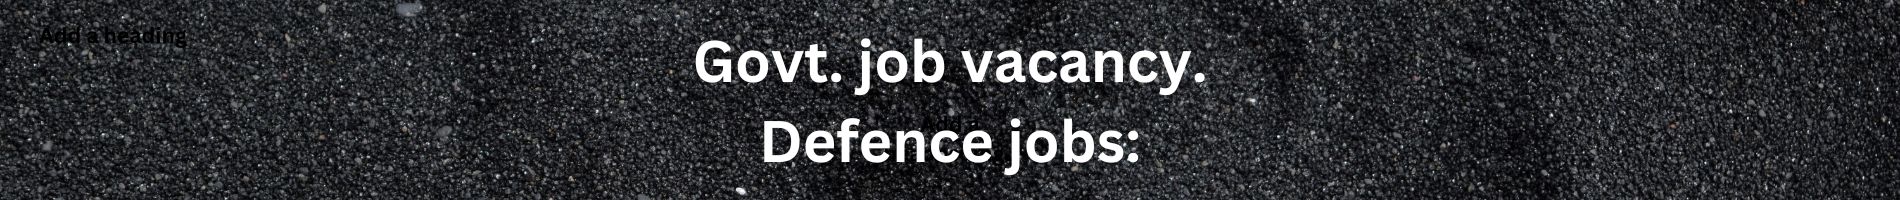 Govt. job vacancy. Defence jobs: